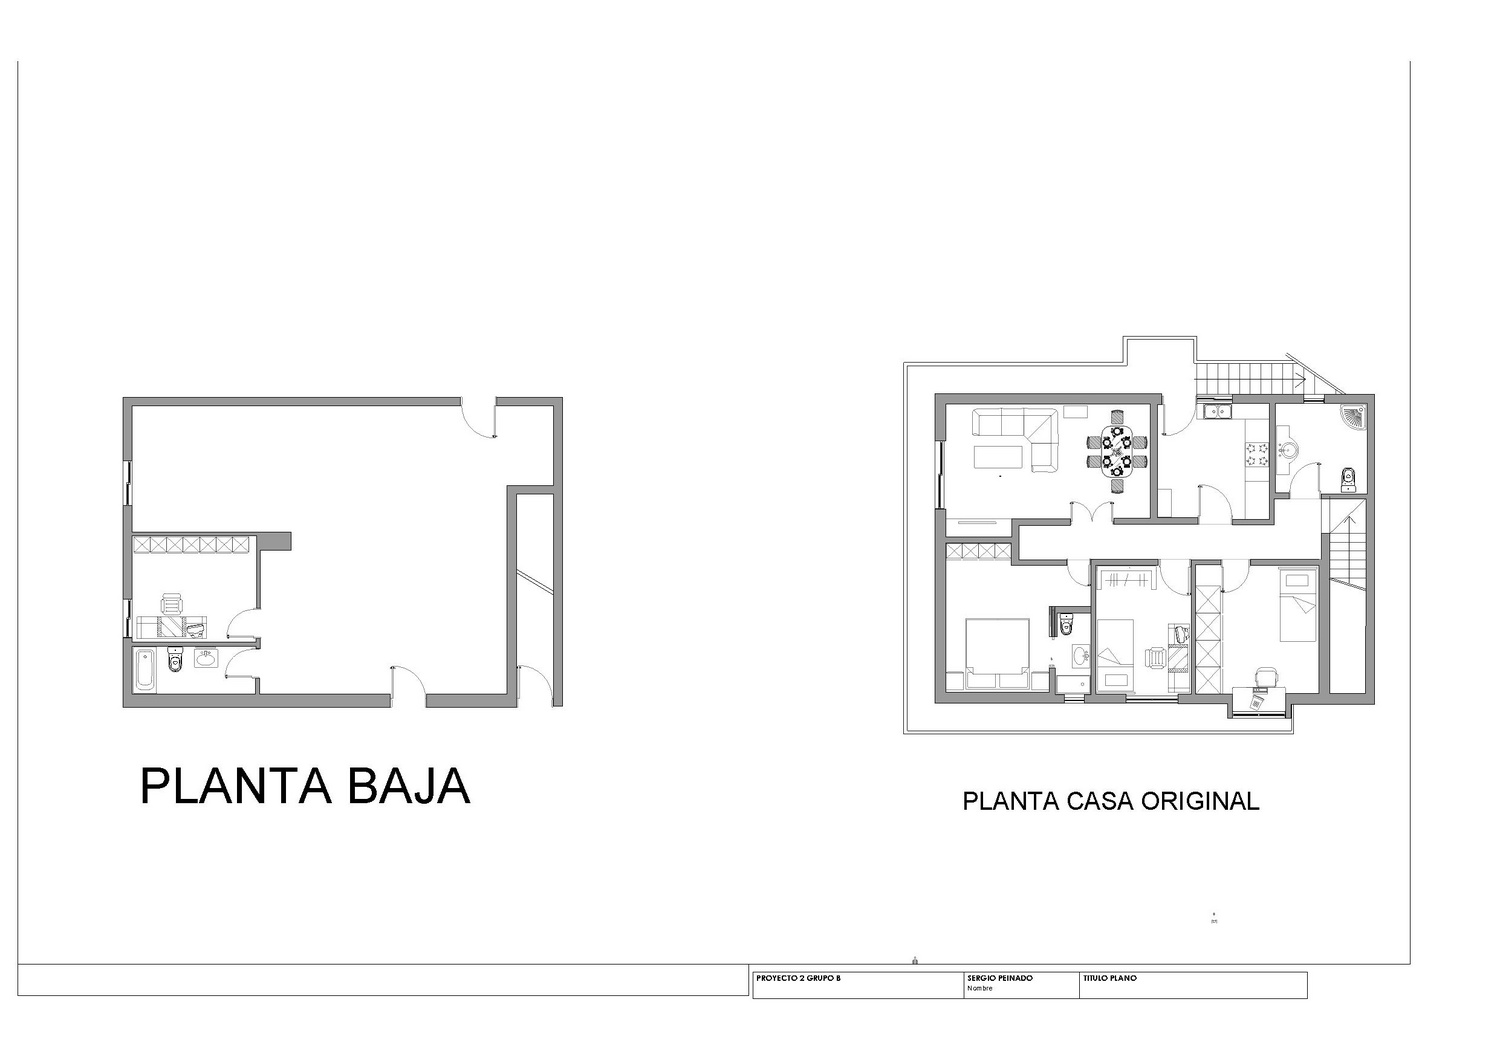 PLANTAS CASA 1.pdf